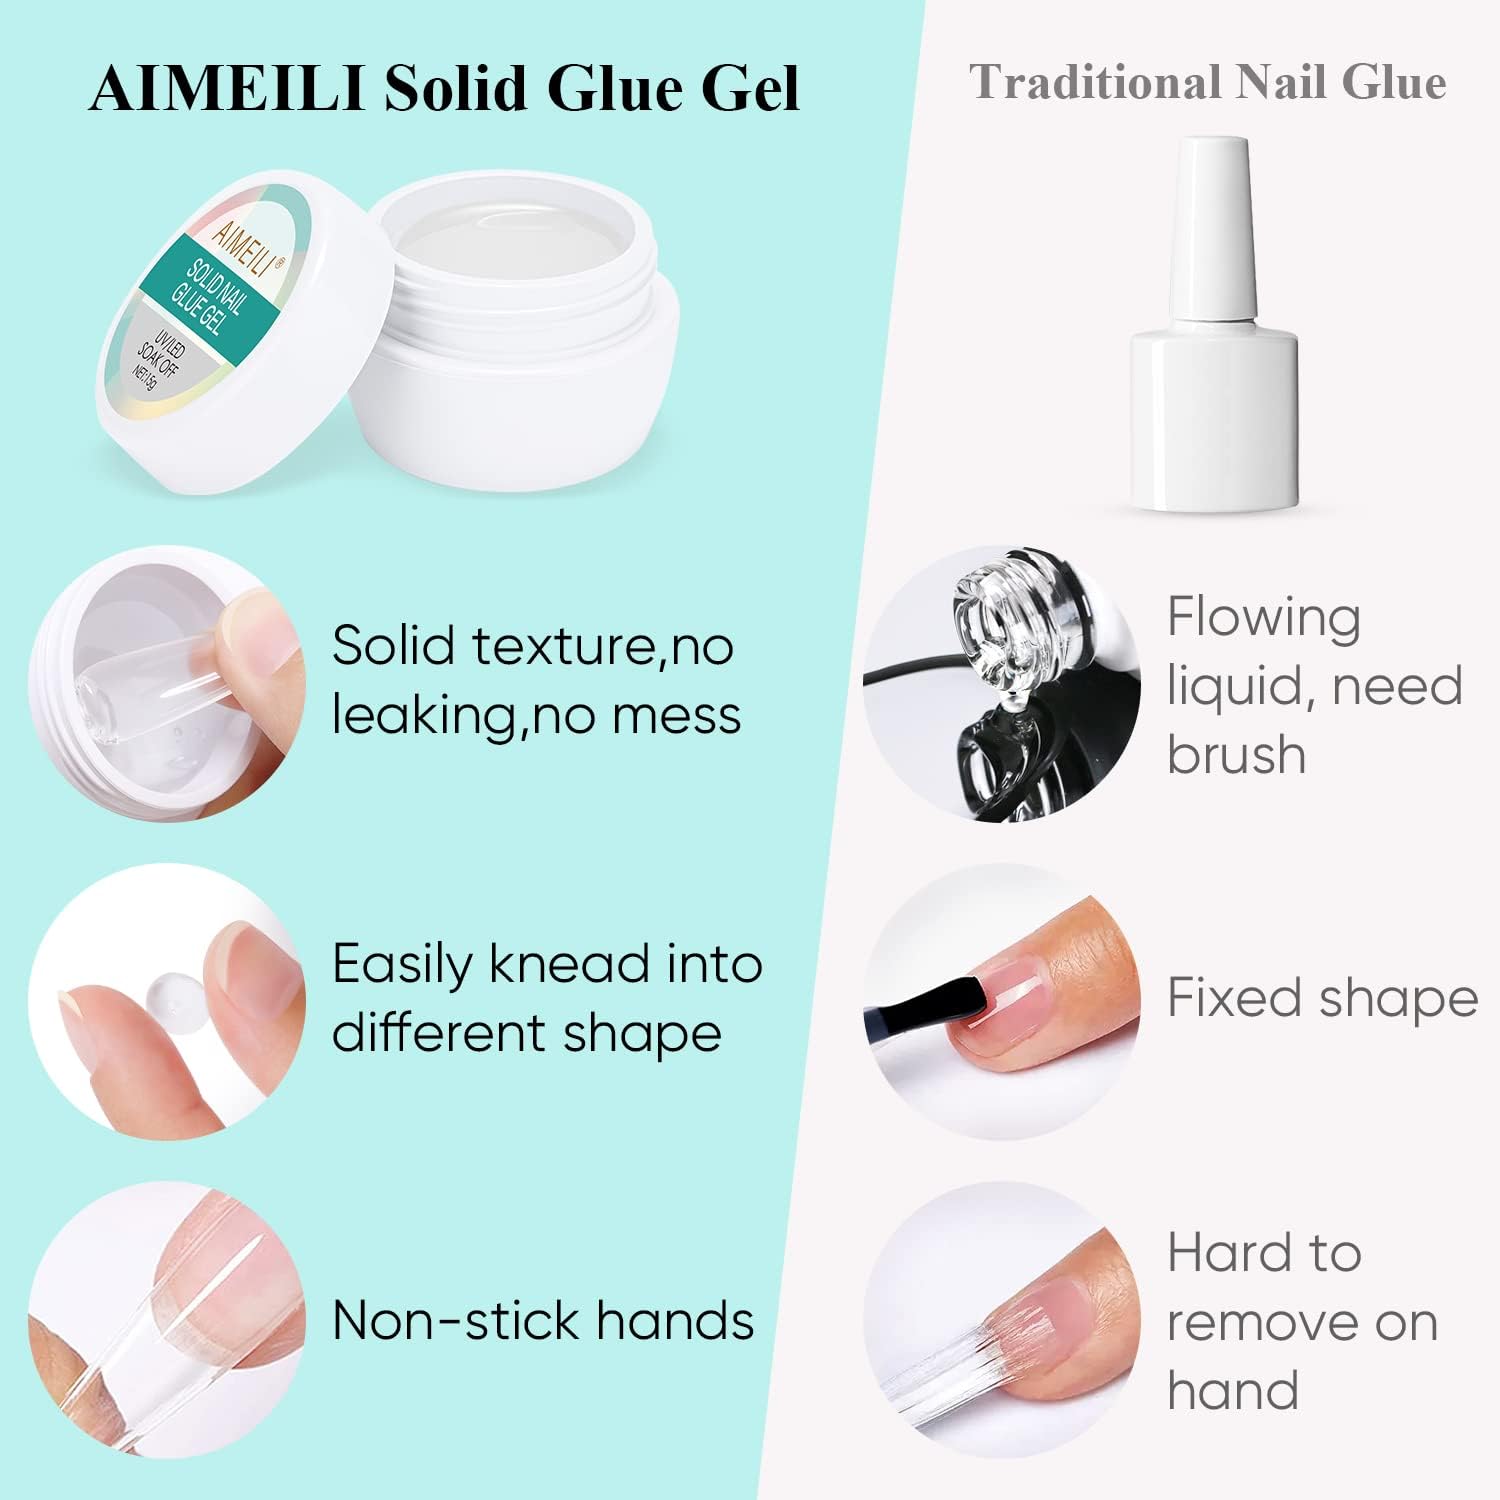 nail glue VS solid glue gel